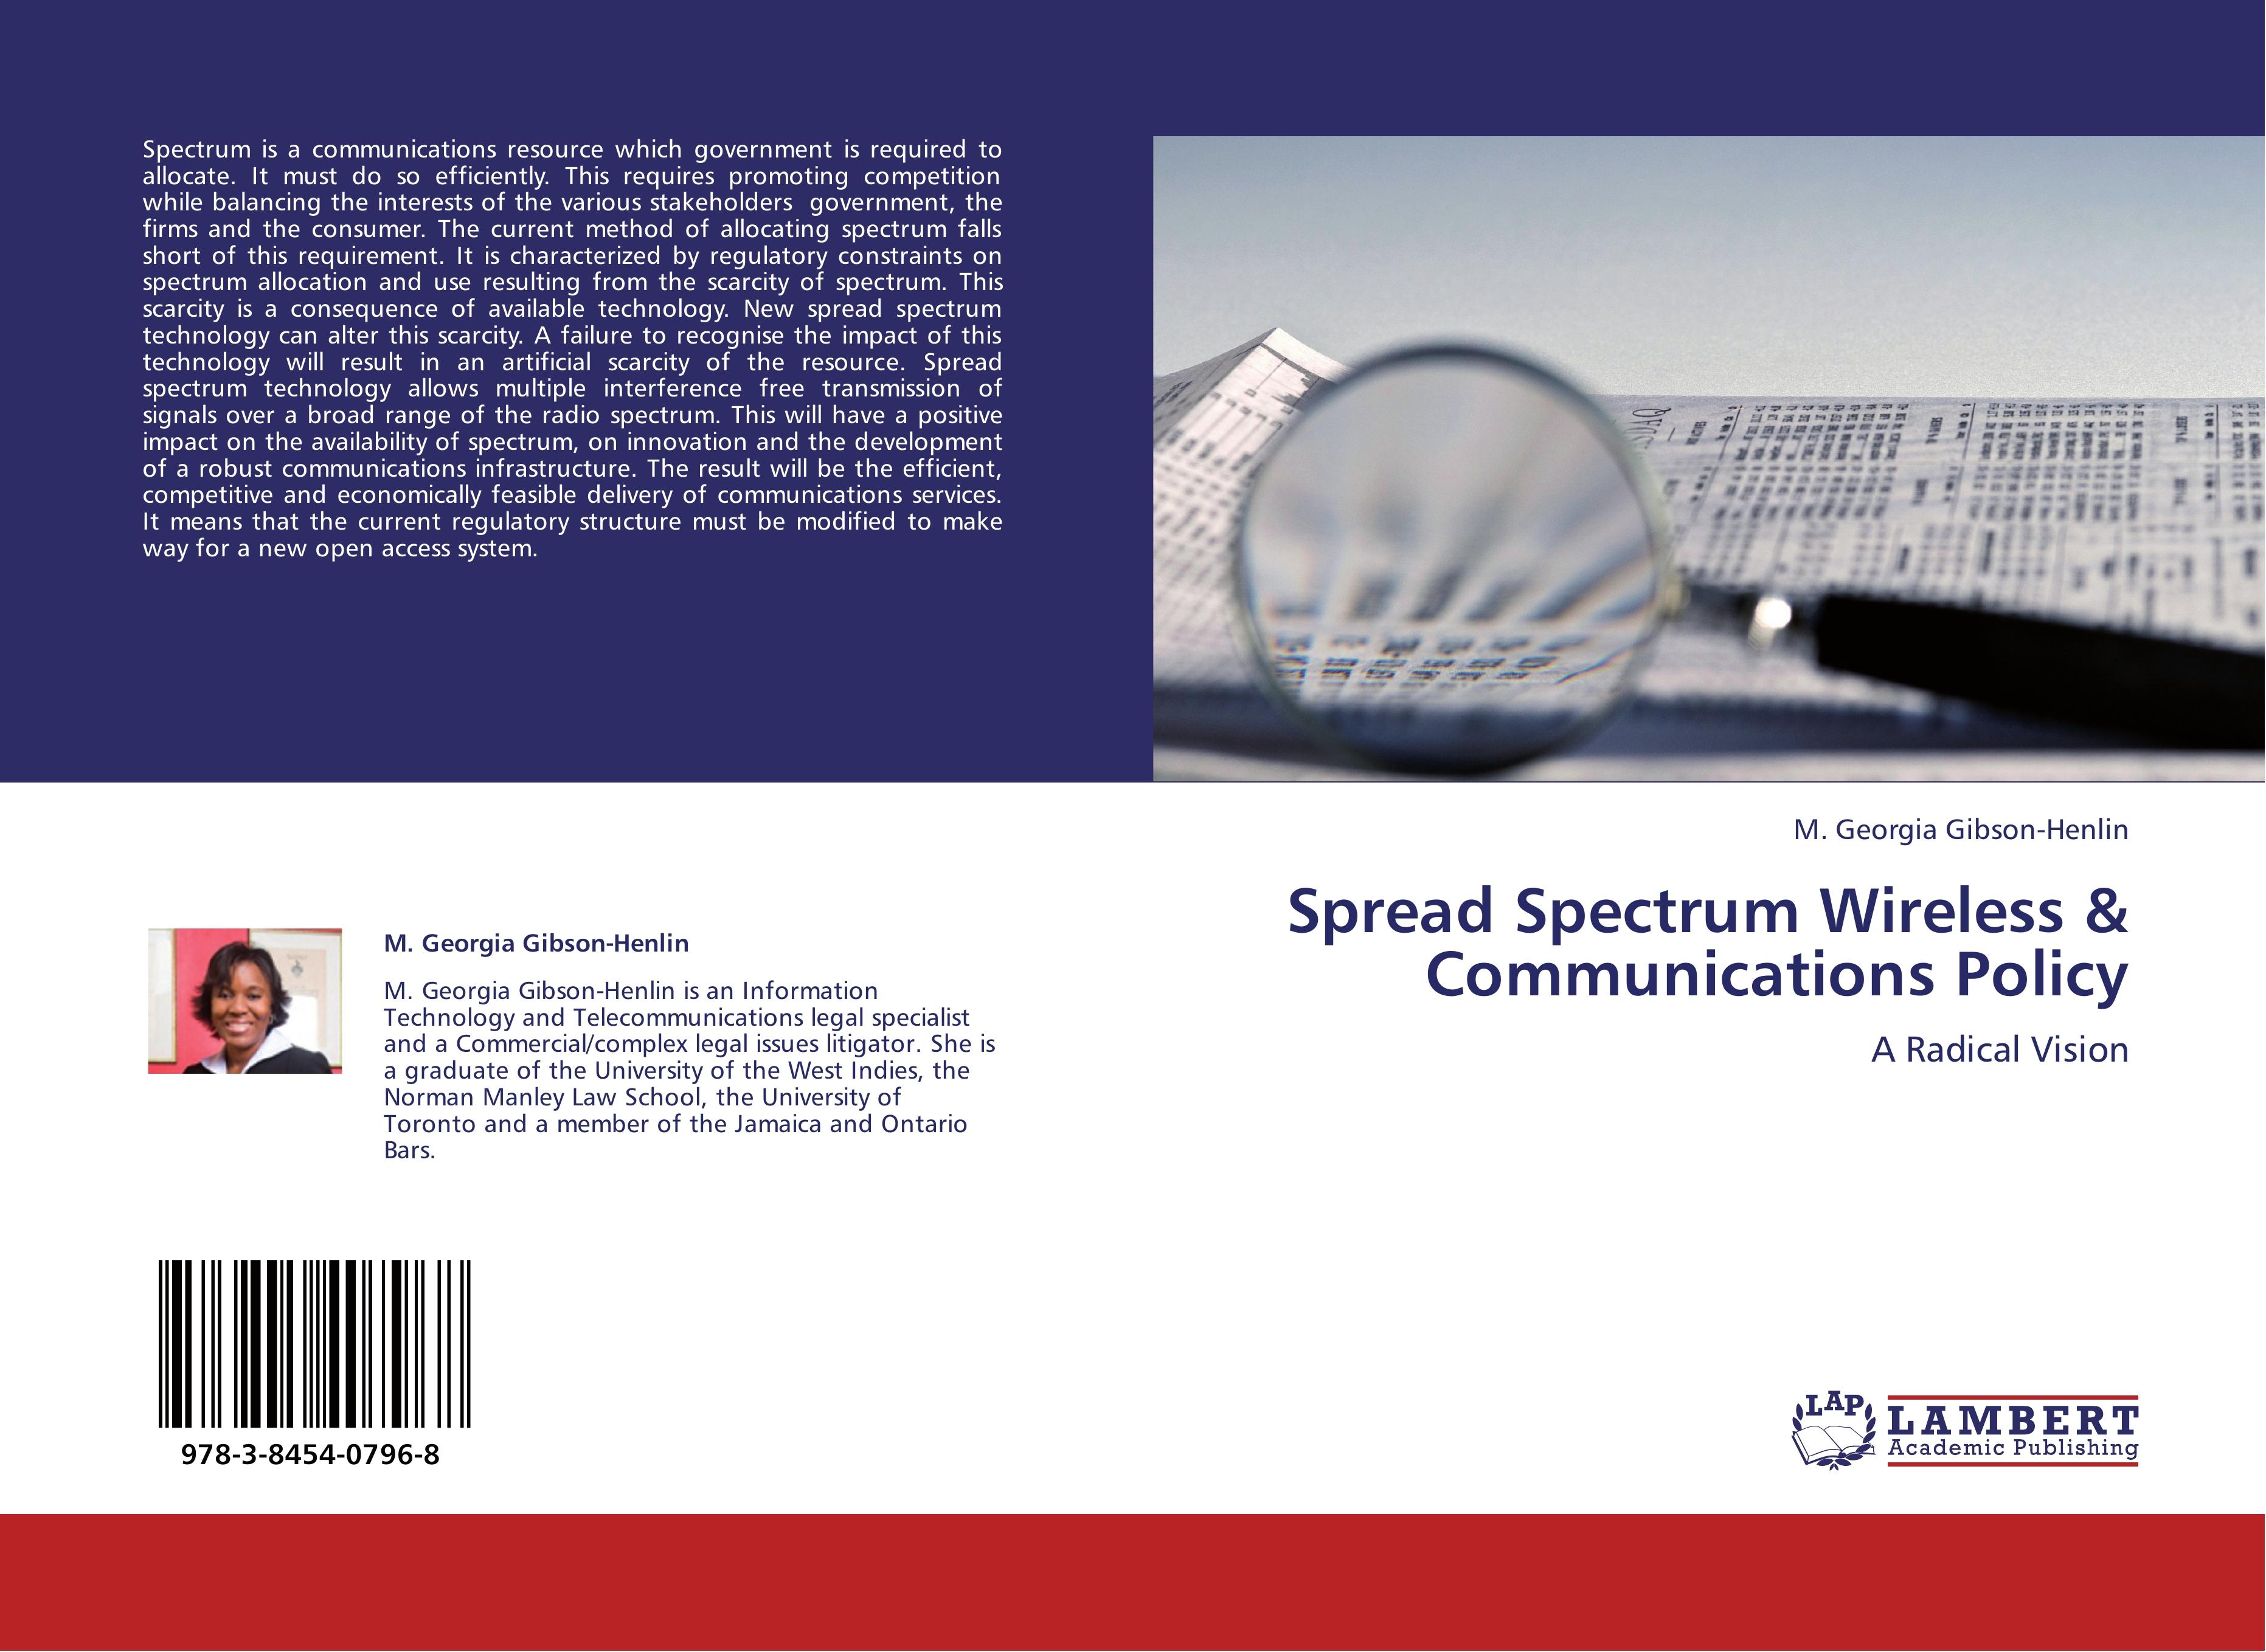 Spread Spectrum Wireless & Communications Policy - M. Georgia Gibson-Henlin